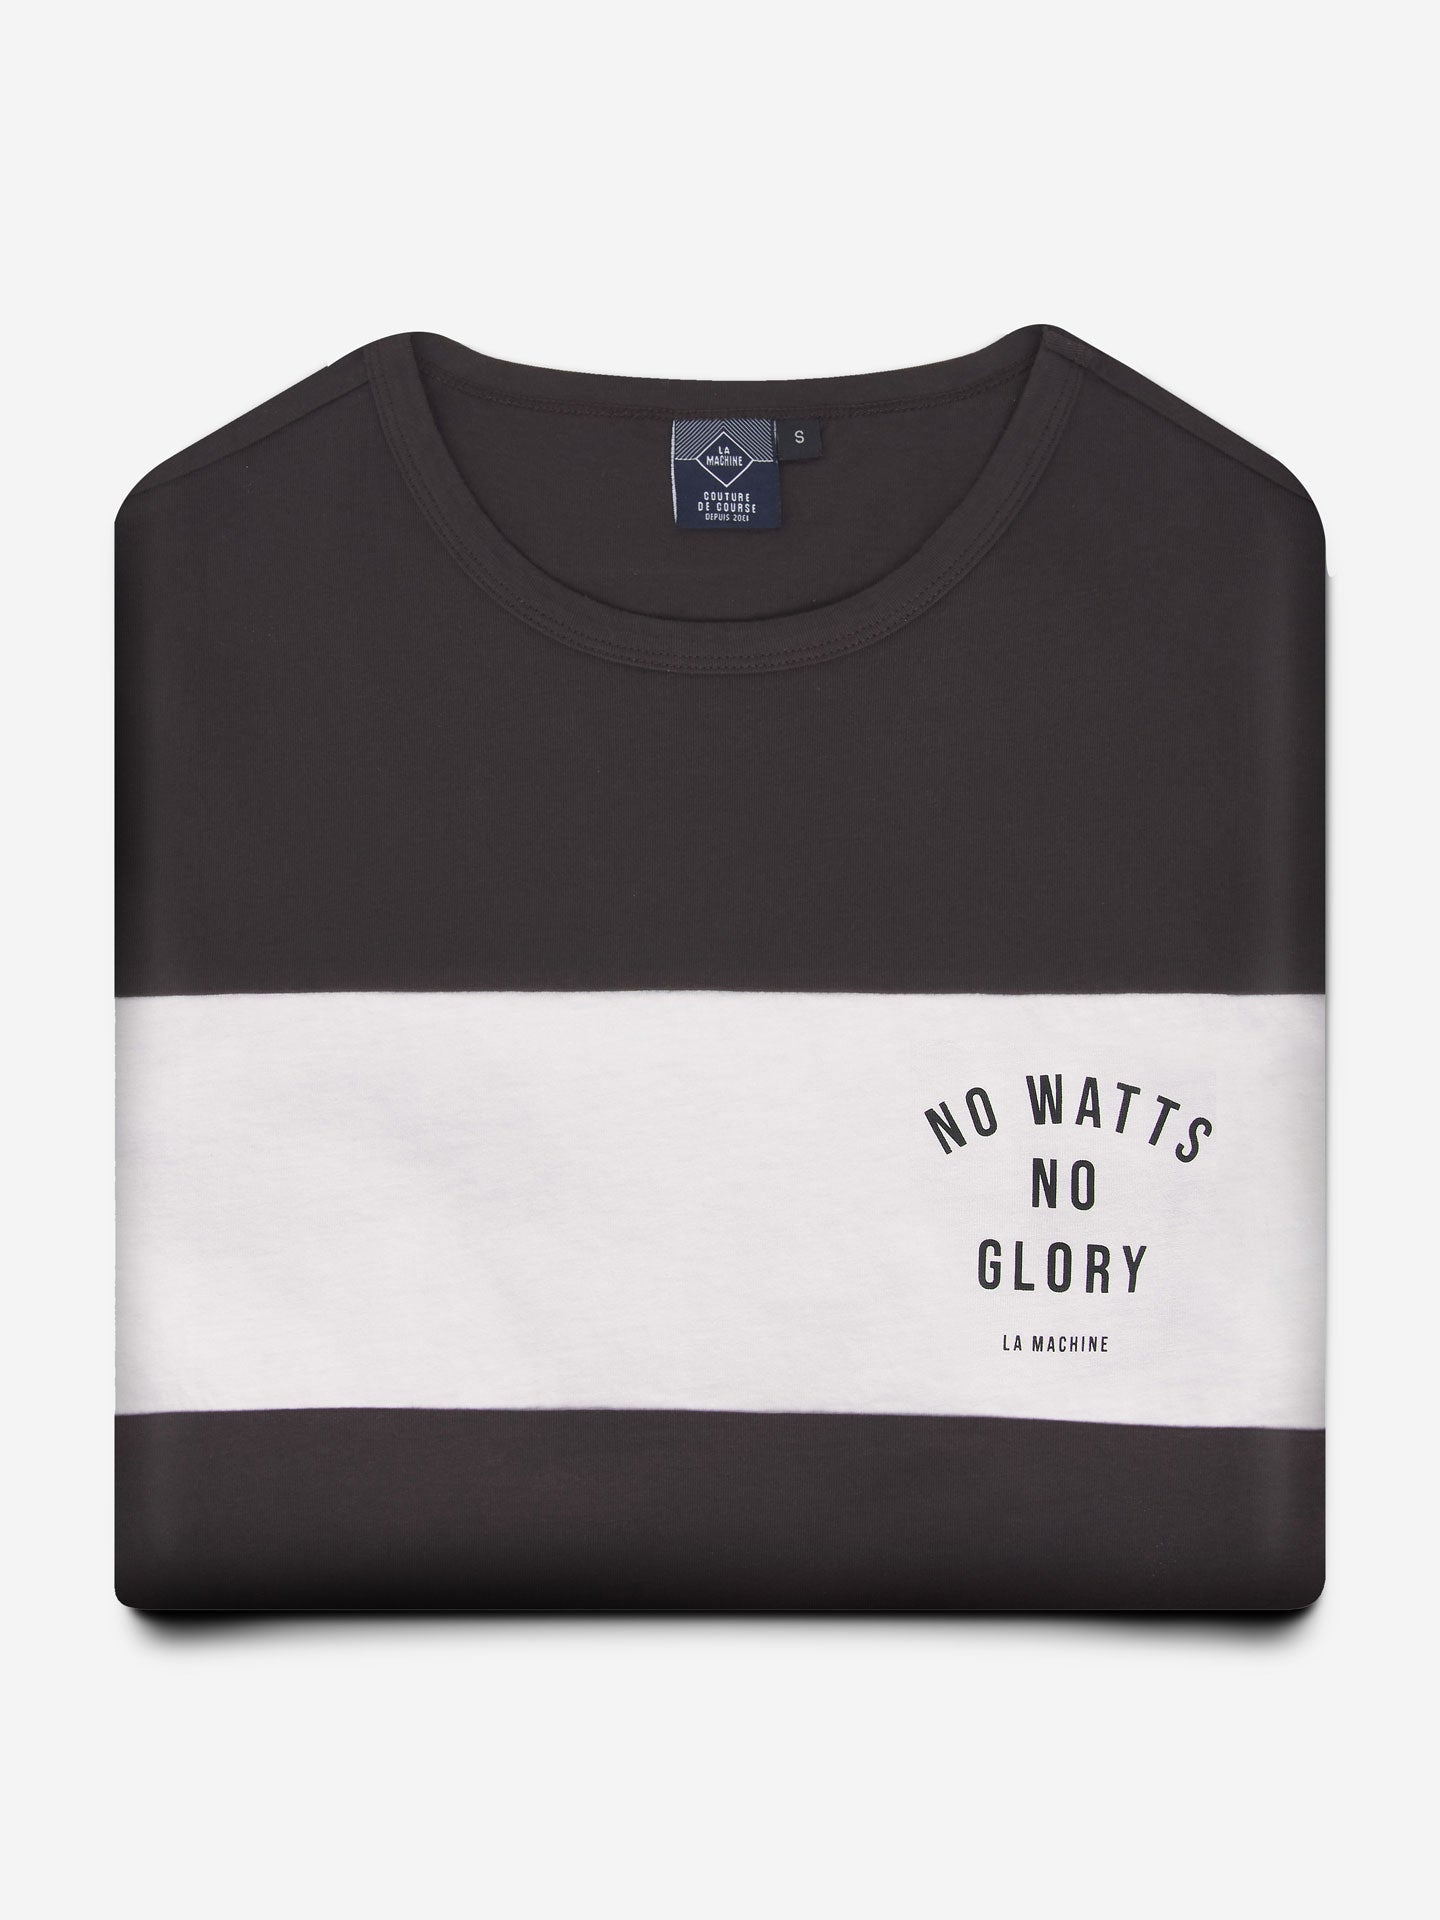 No Watts No Glory - Long Sleeve T-shirt - La Machine Cycle Club